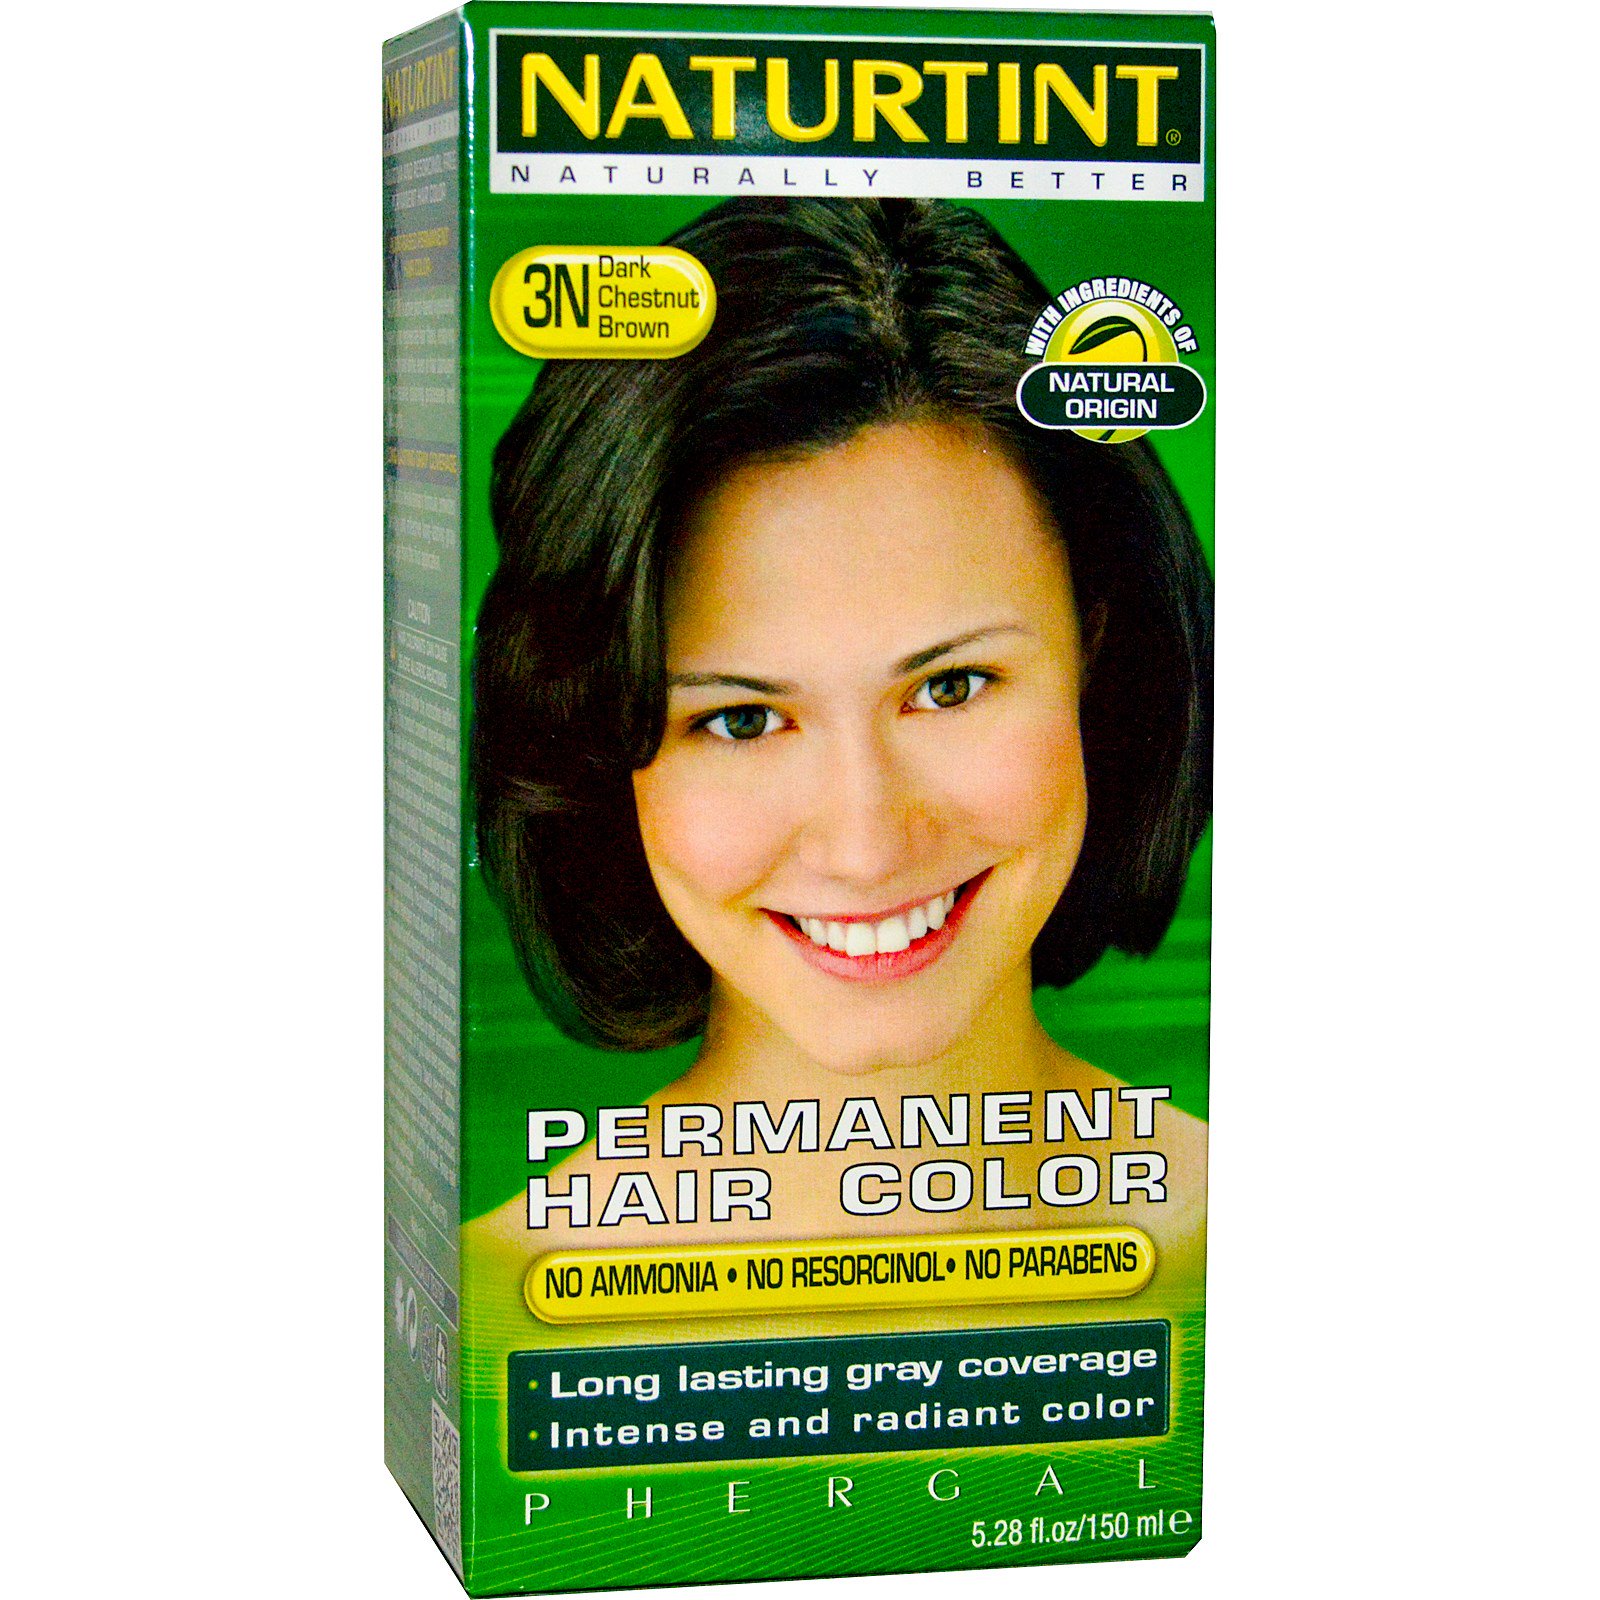 Naturtint Permanent Hair Color 3n Dark Chestnut Brown